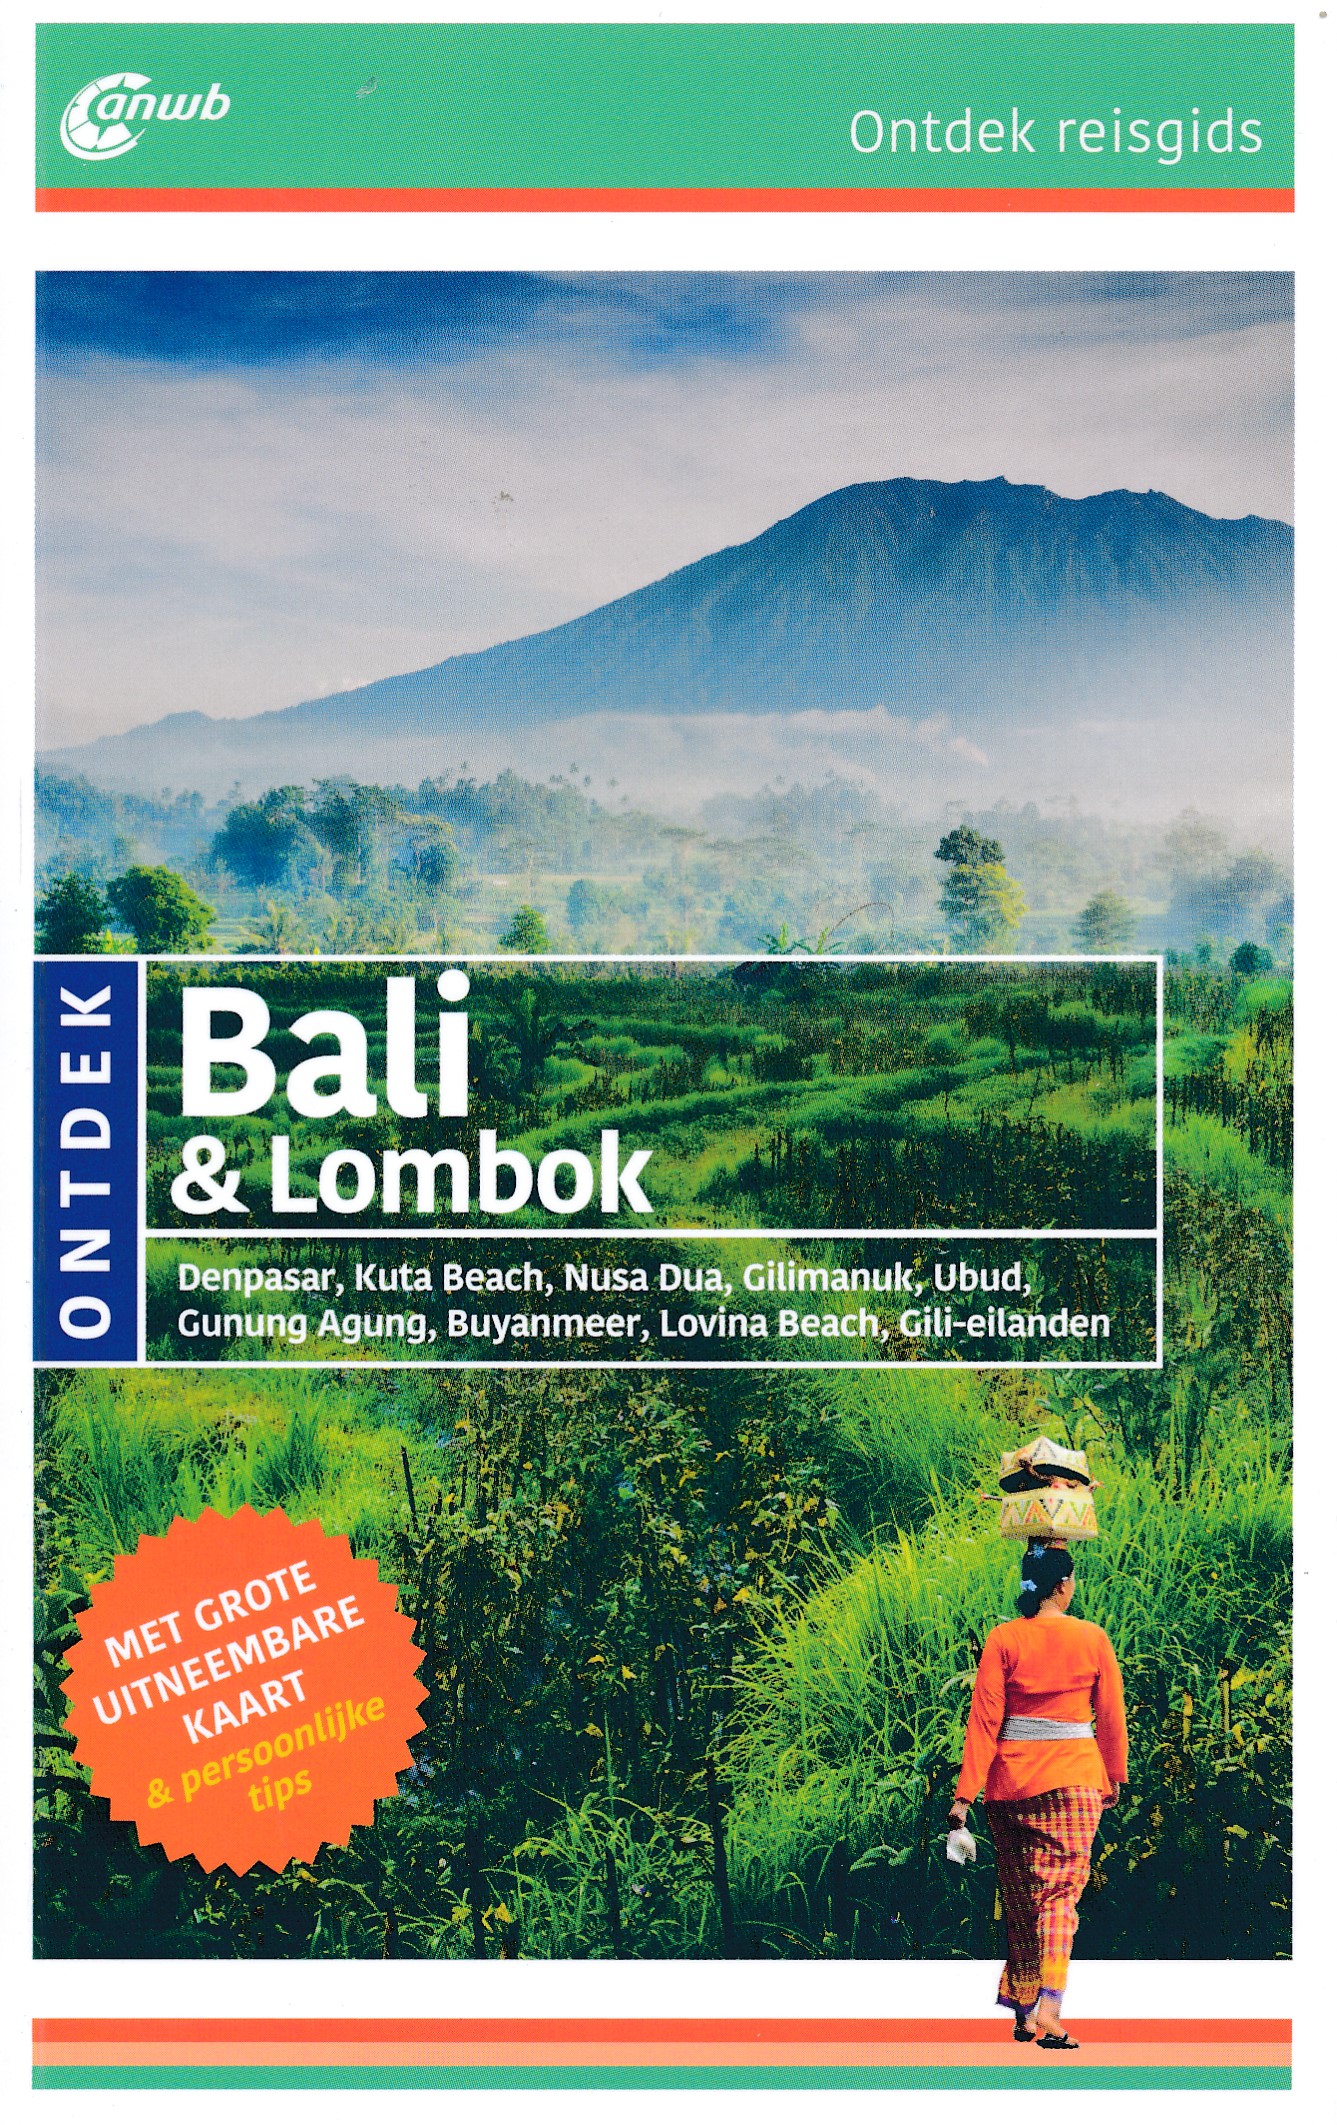 Online bestellen: Reisgids ANWB Ontdek Bali en Lombok | ANWB Media